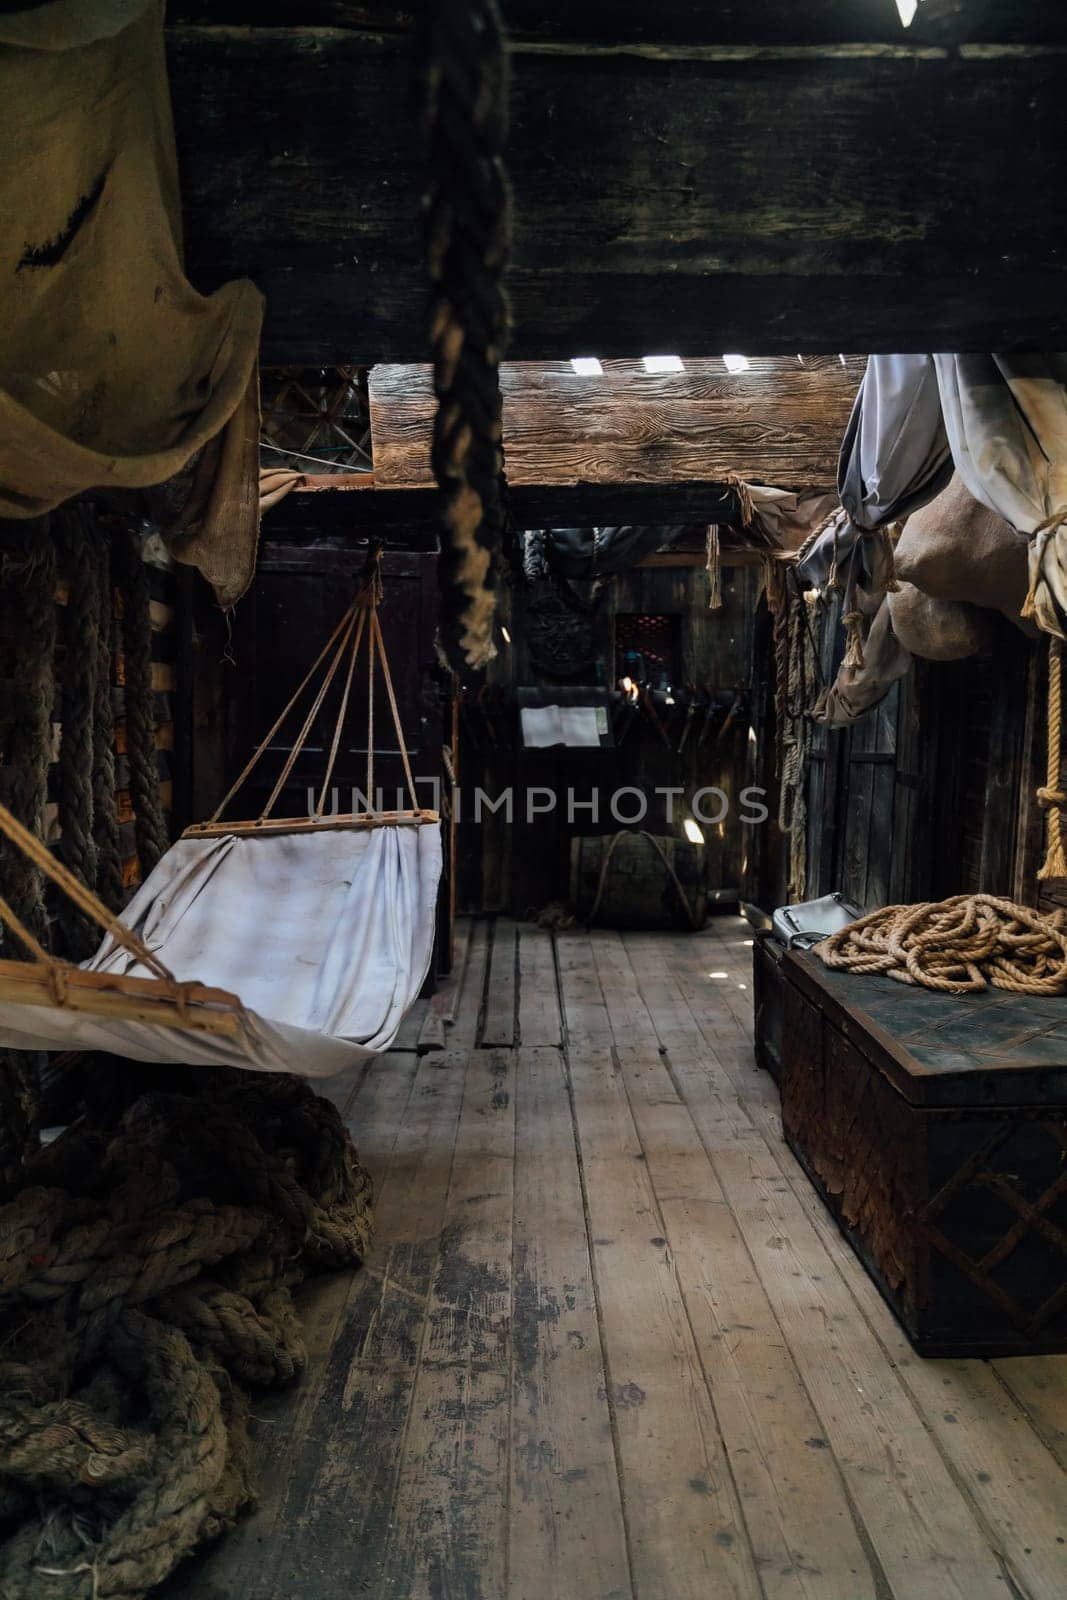 Deck of a vintage wooden ship